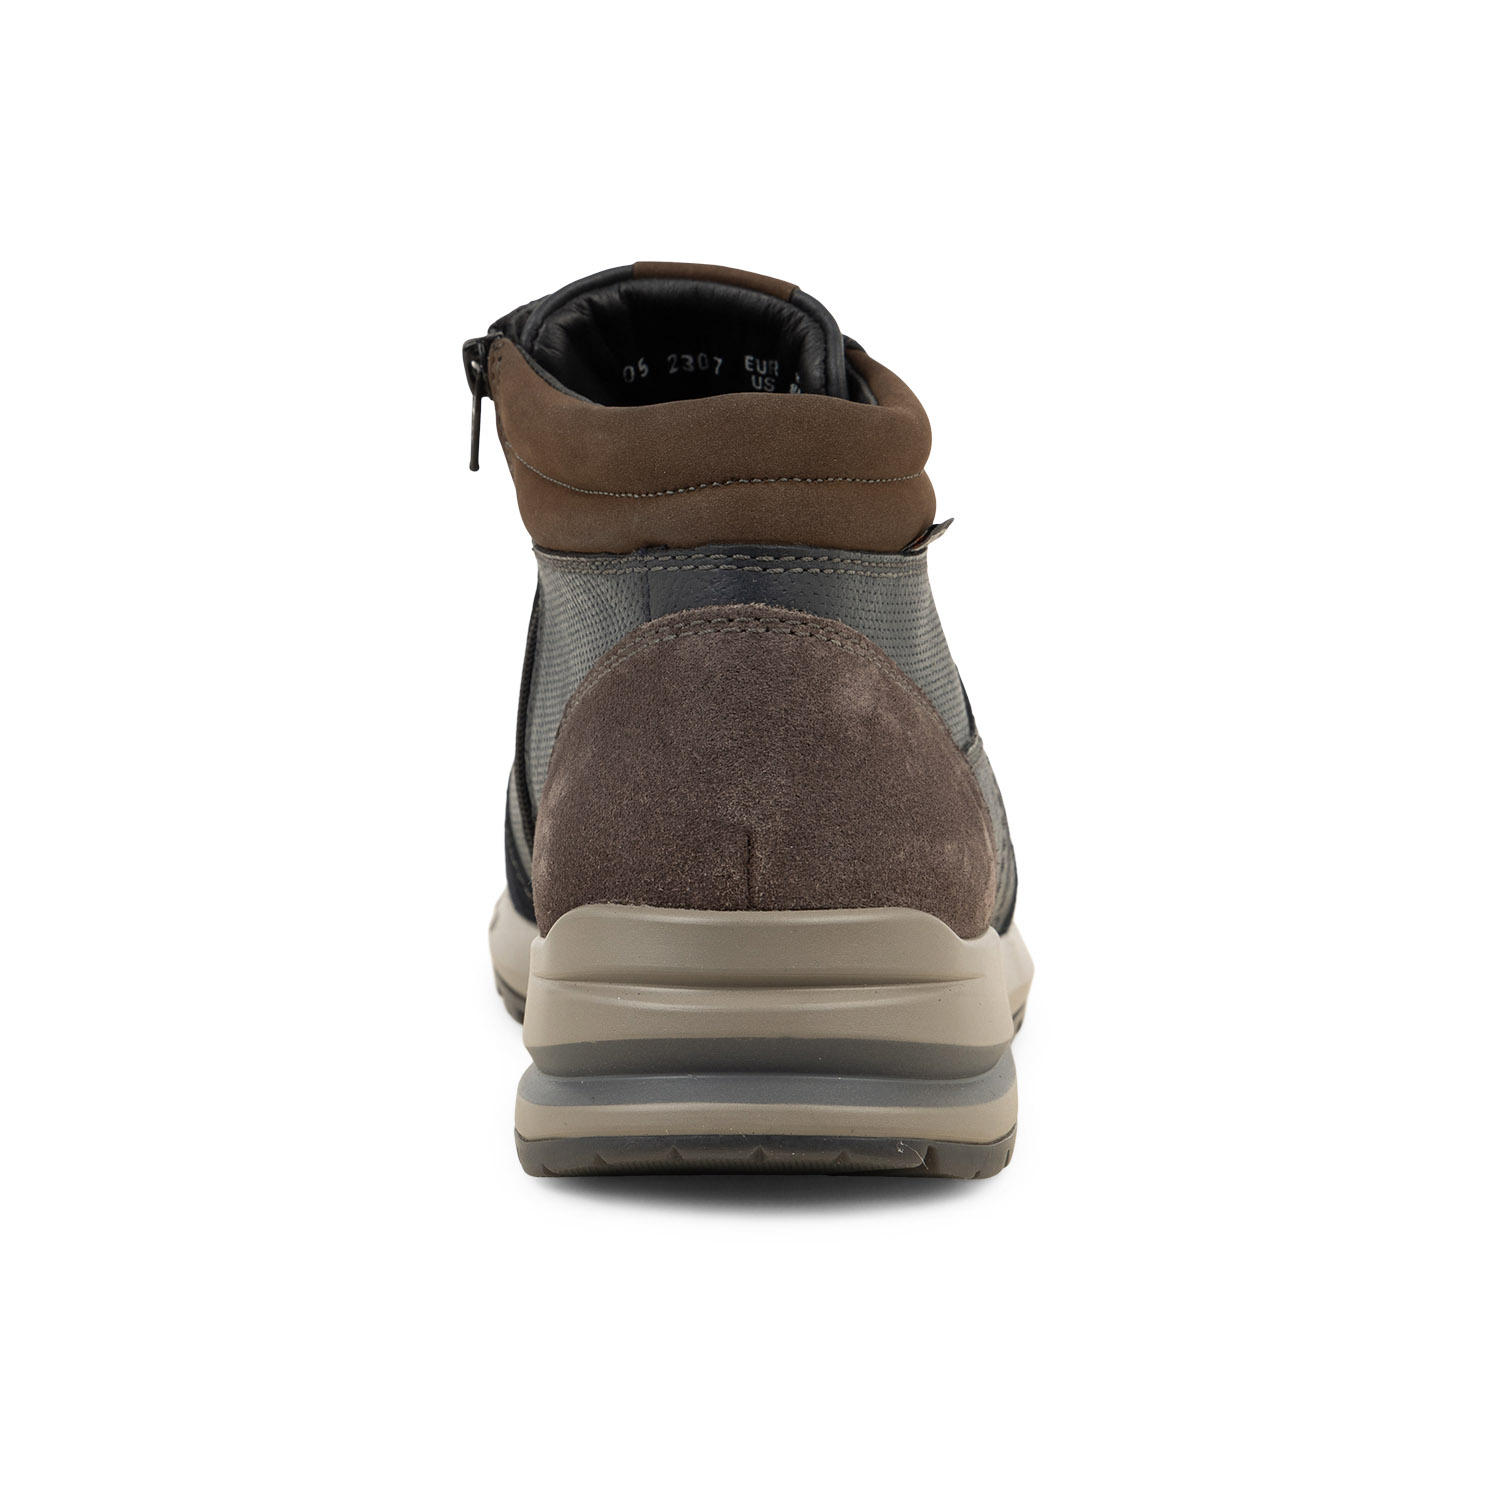 03 - BORAN - MEPHISTO - Chaussures à lacets - Nubuck